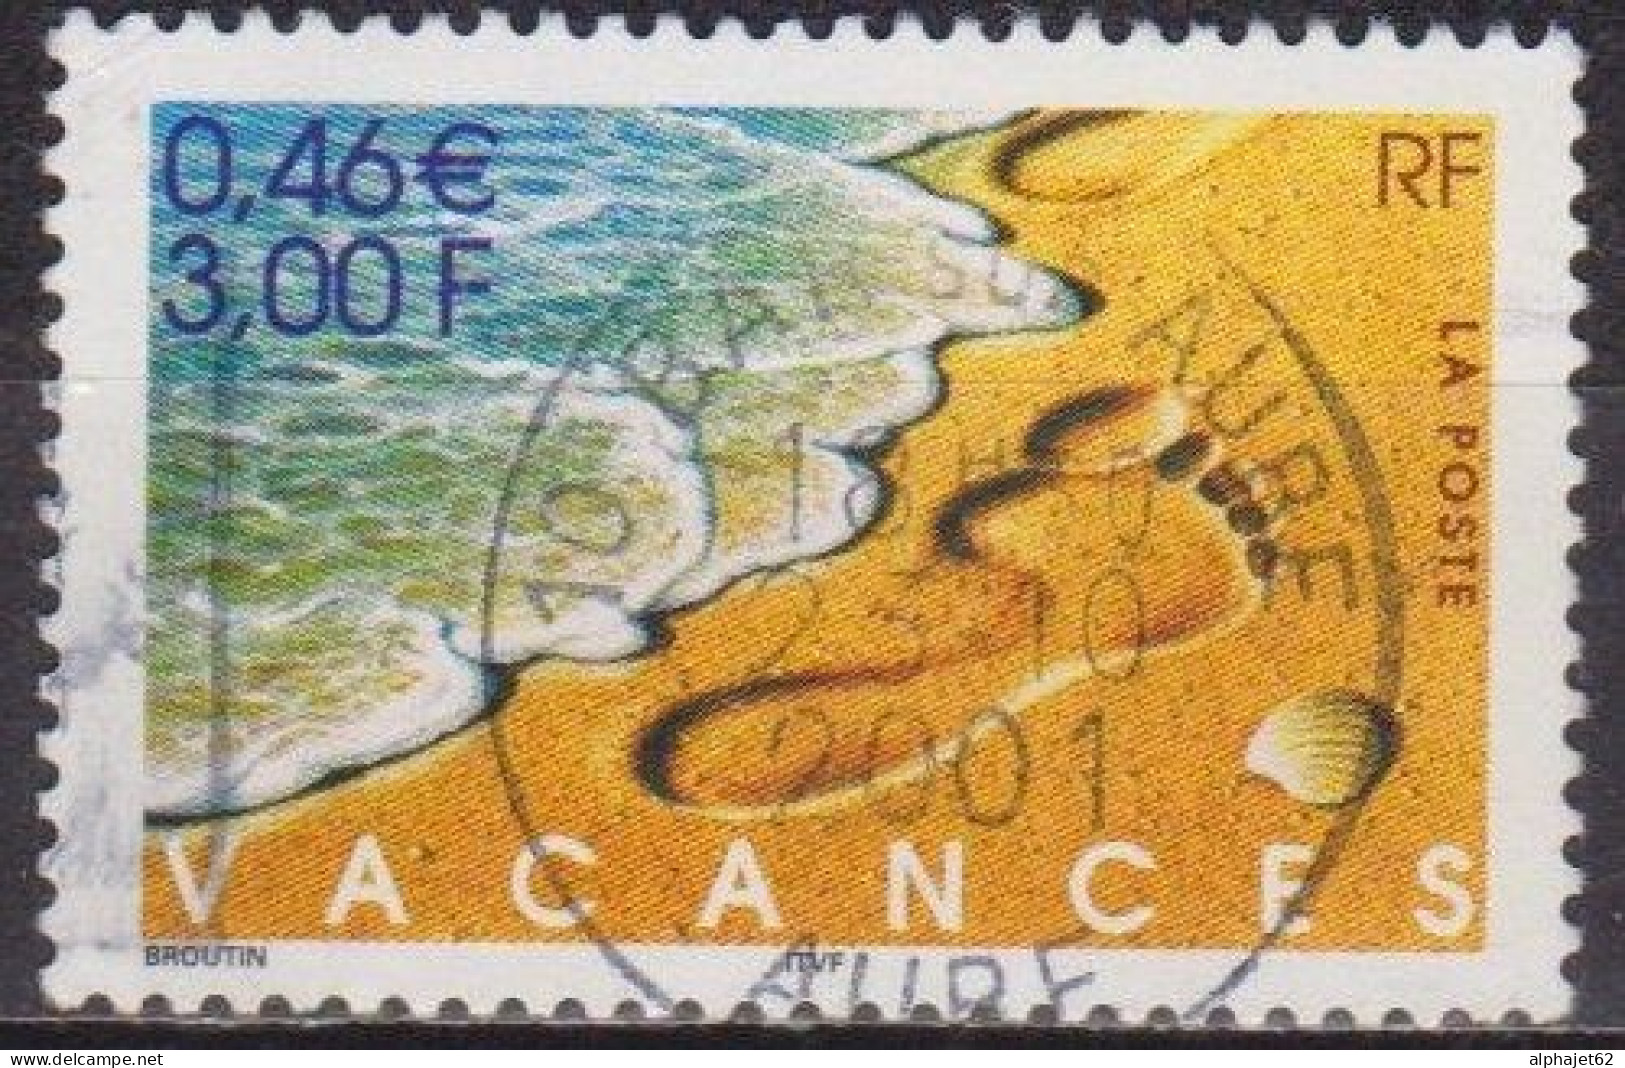 Vacances - FRANCE - Pas Dans Le Sable, Mer - N° 3399 - 2001 - Used Stamps